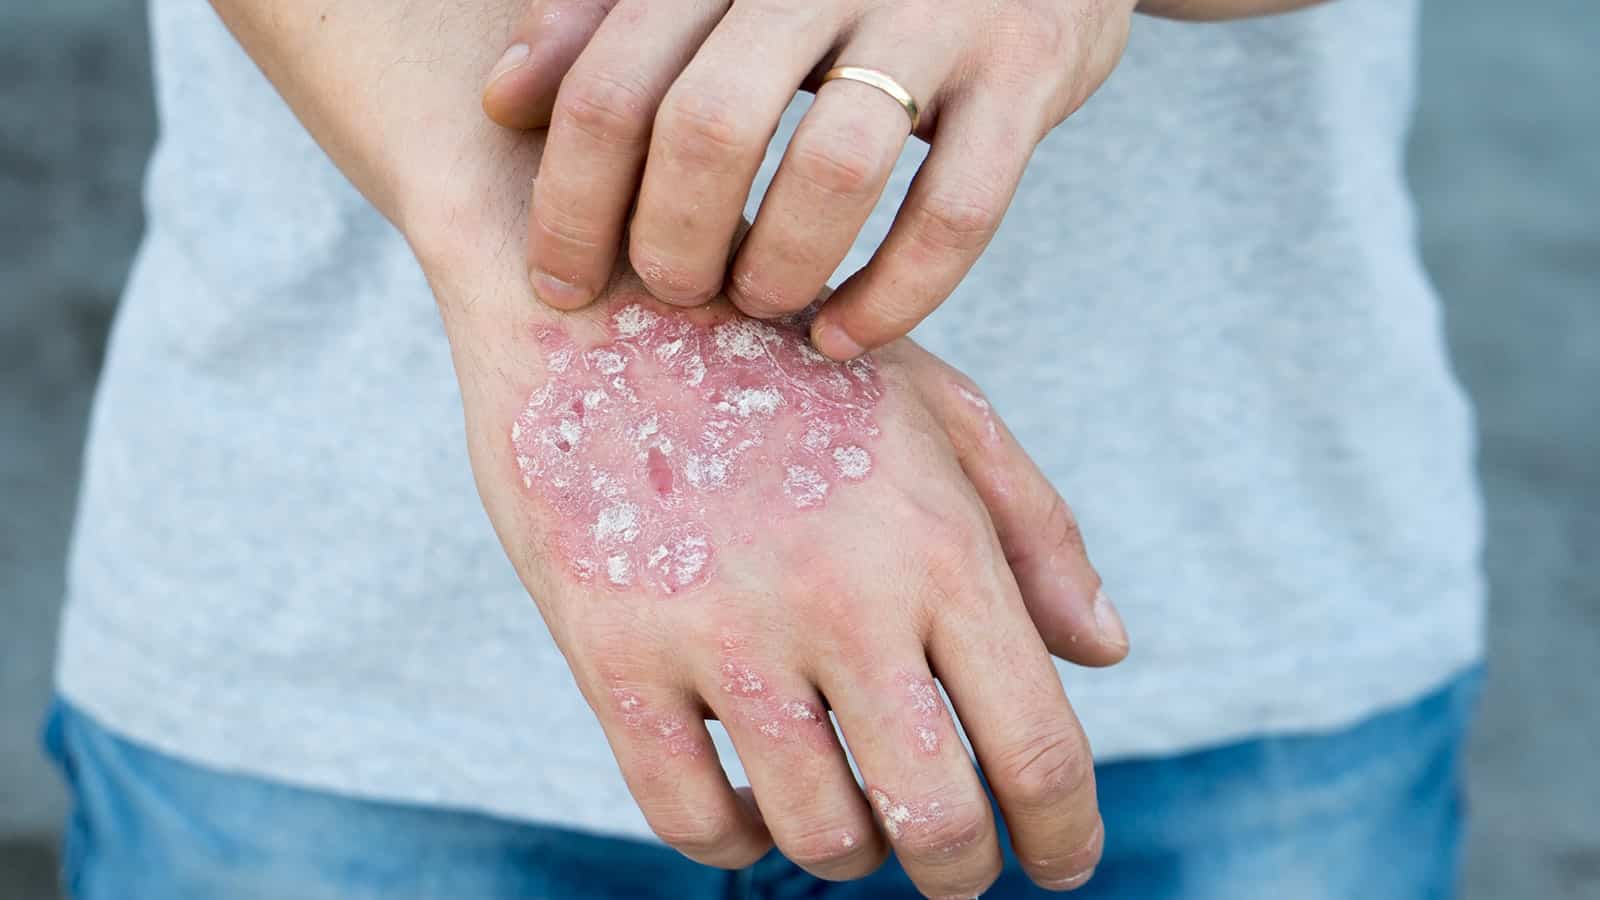 12 Foods that Make Eczema Worse